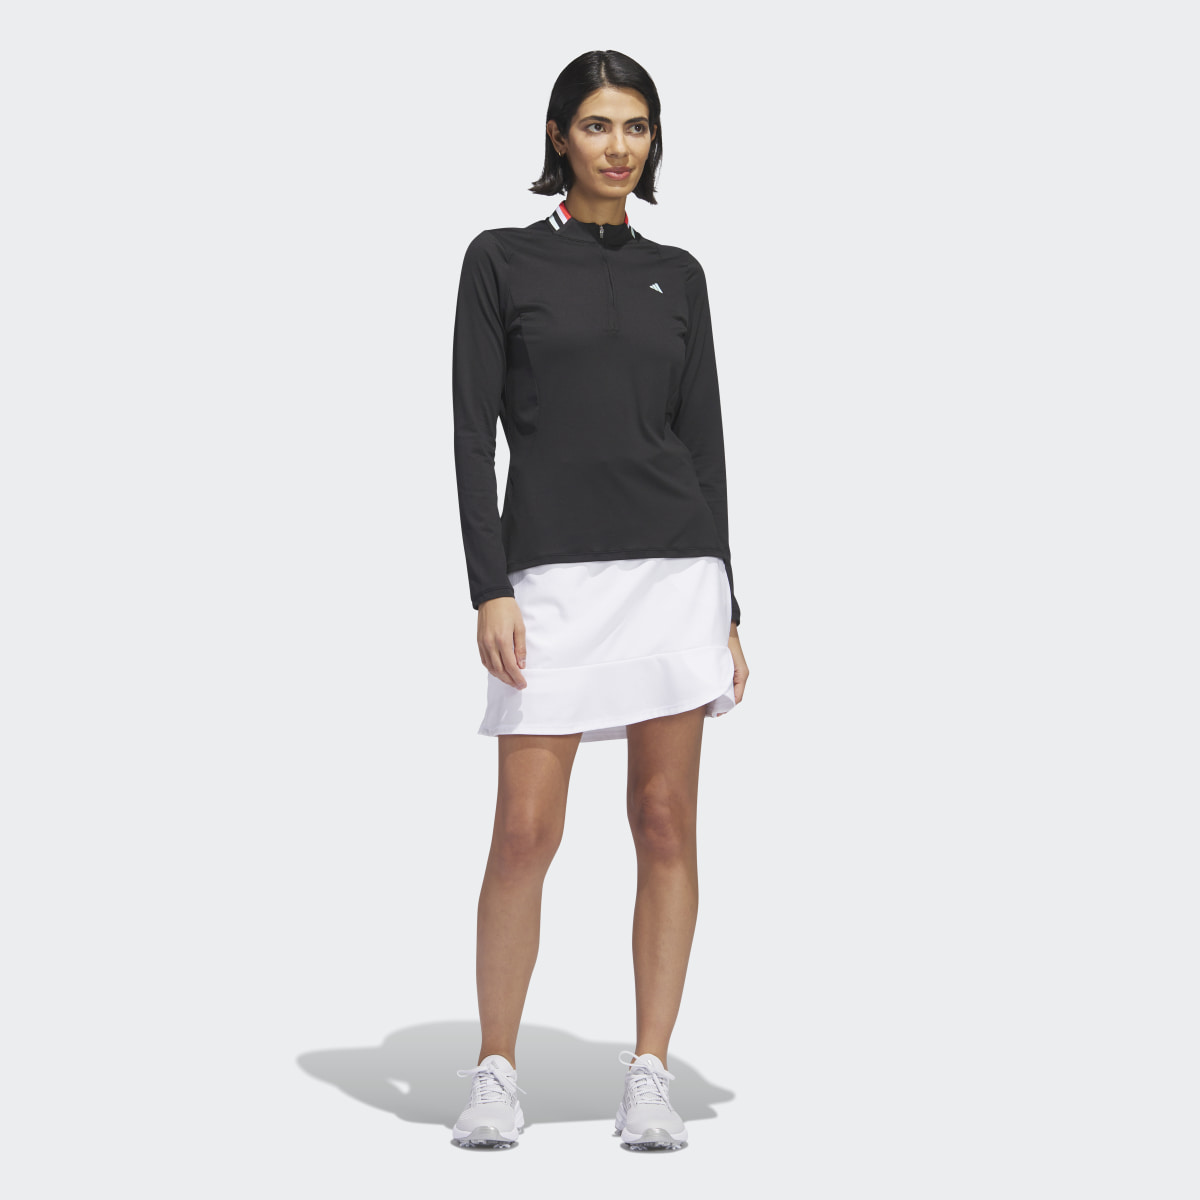 Adidas Ultimate365 Tour Long Sleeve Mock Polo Shirt. 7